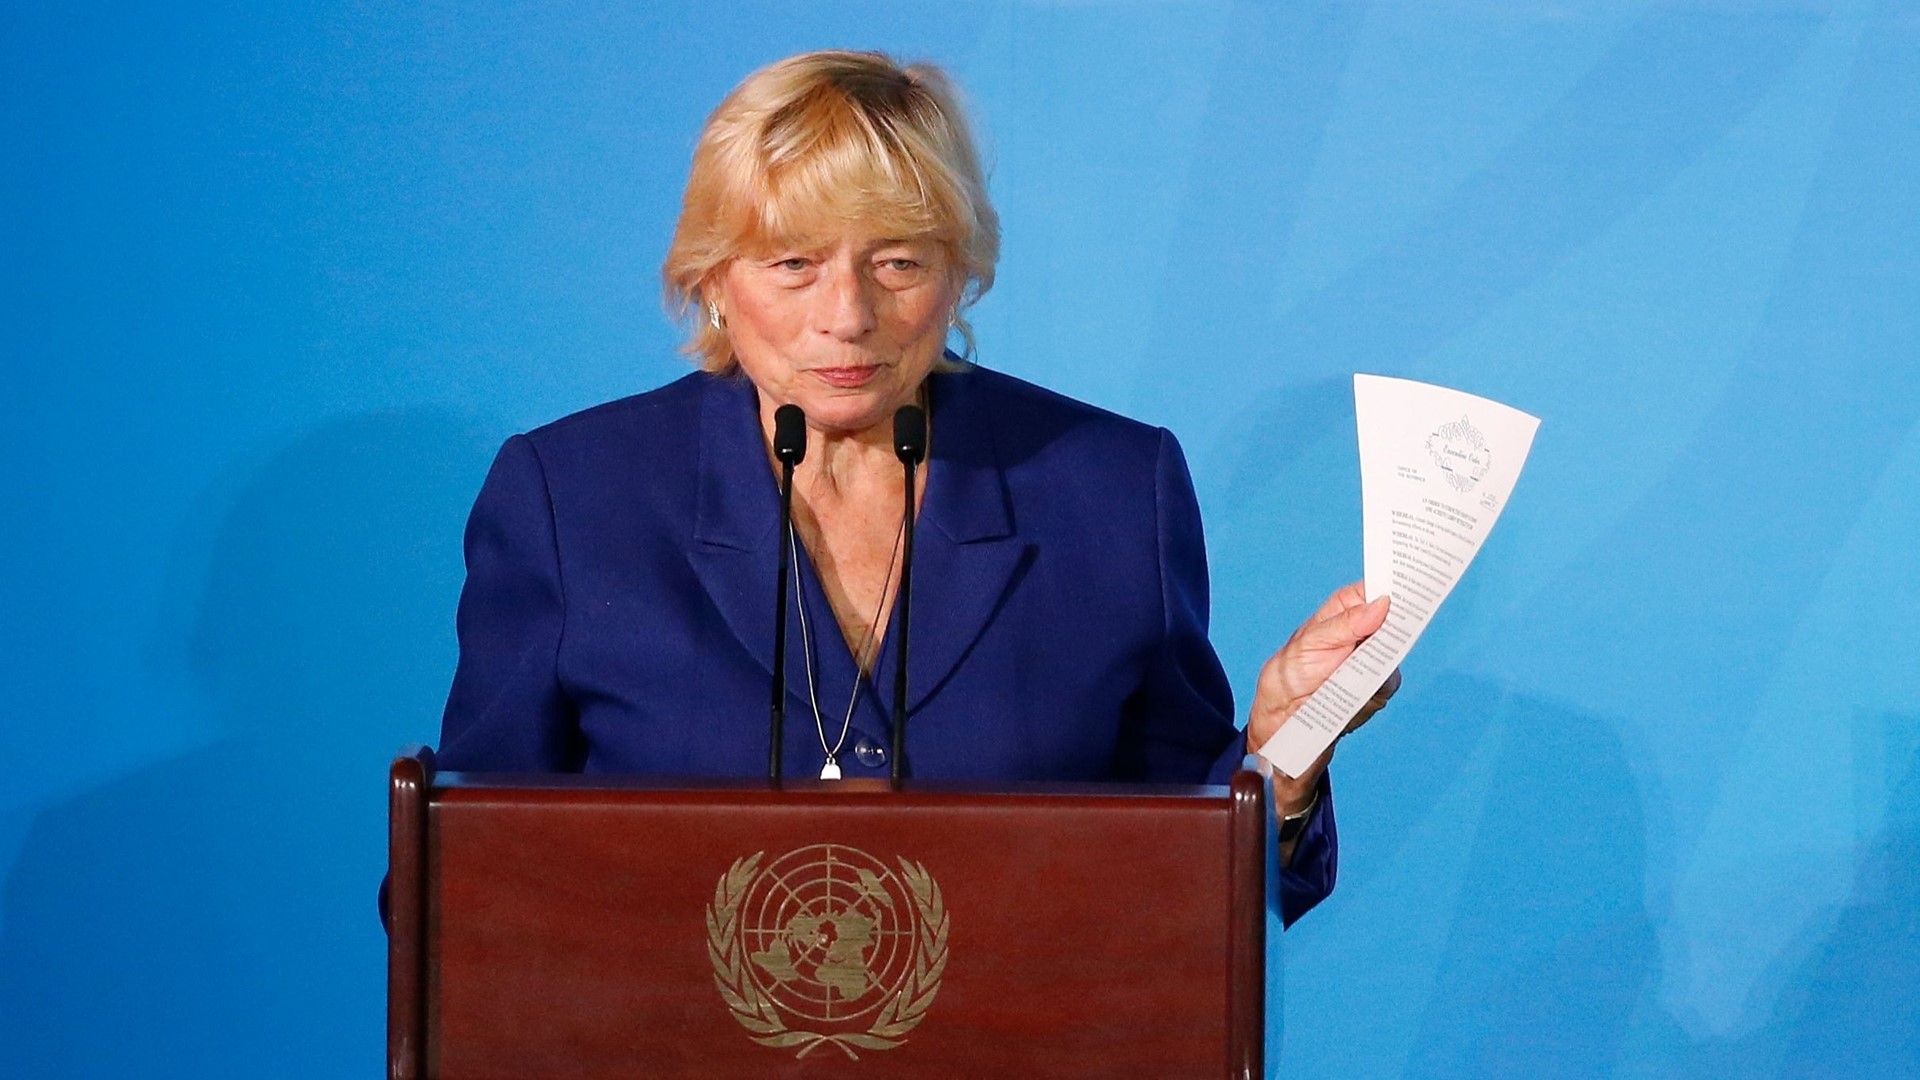 Gov. Janet Mills delivers remarks on climate change before United Nations